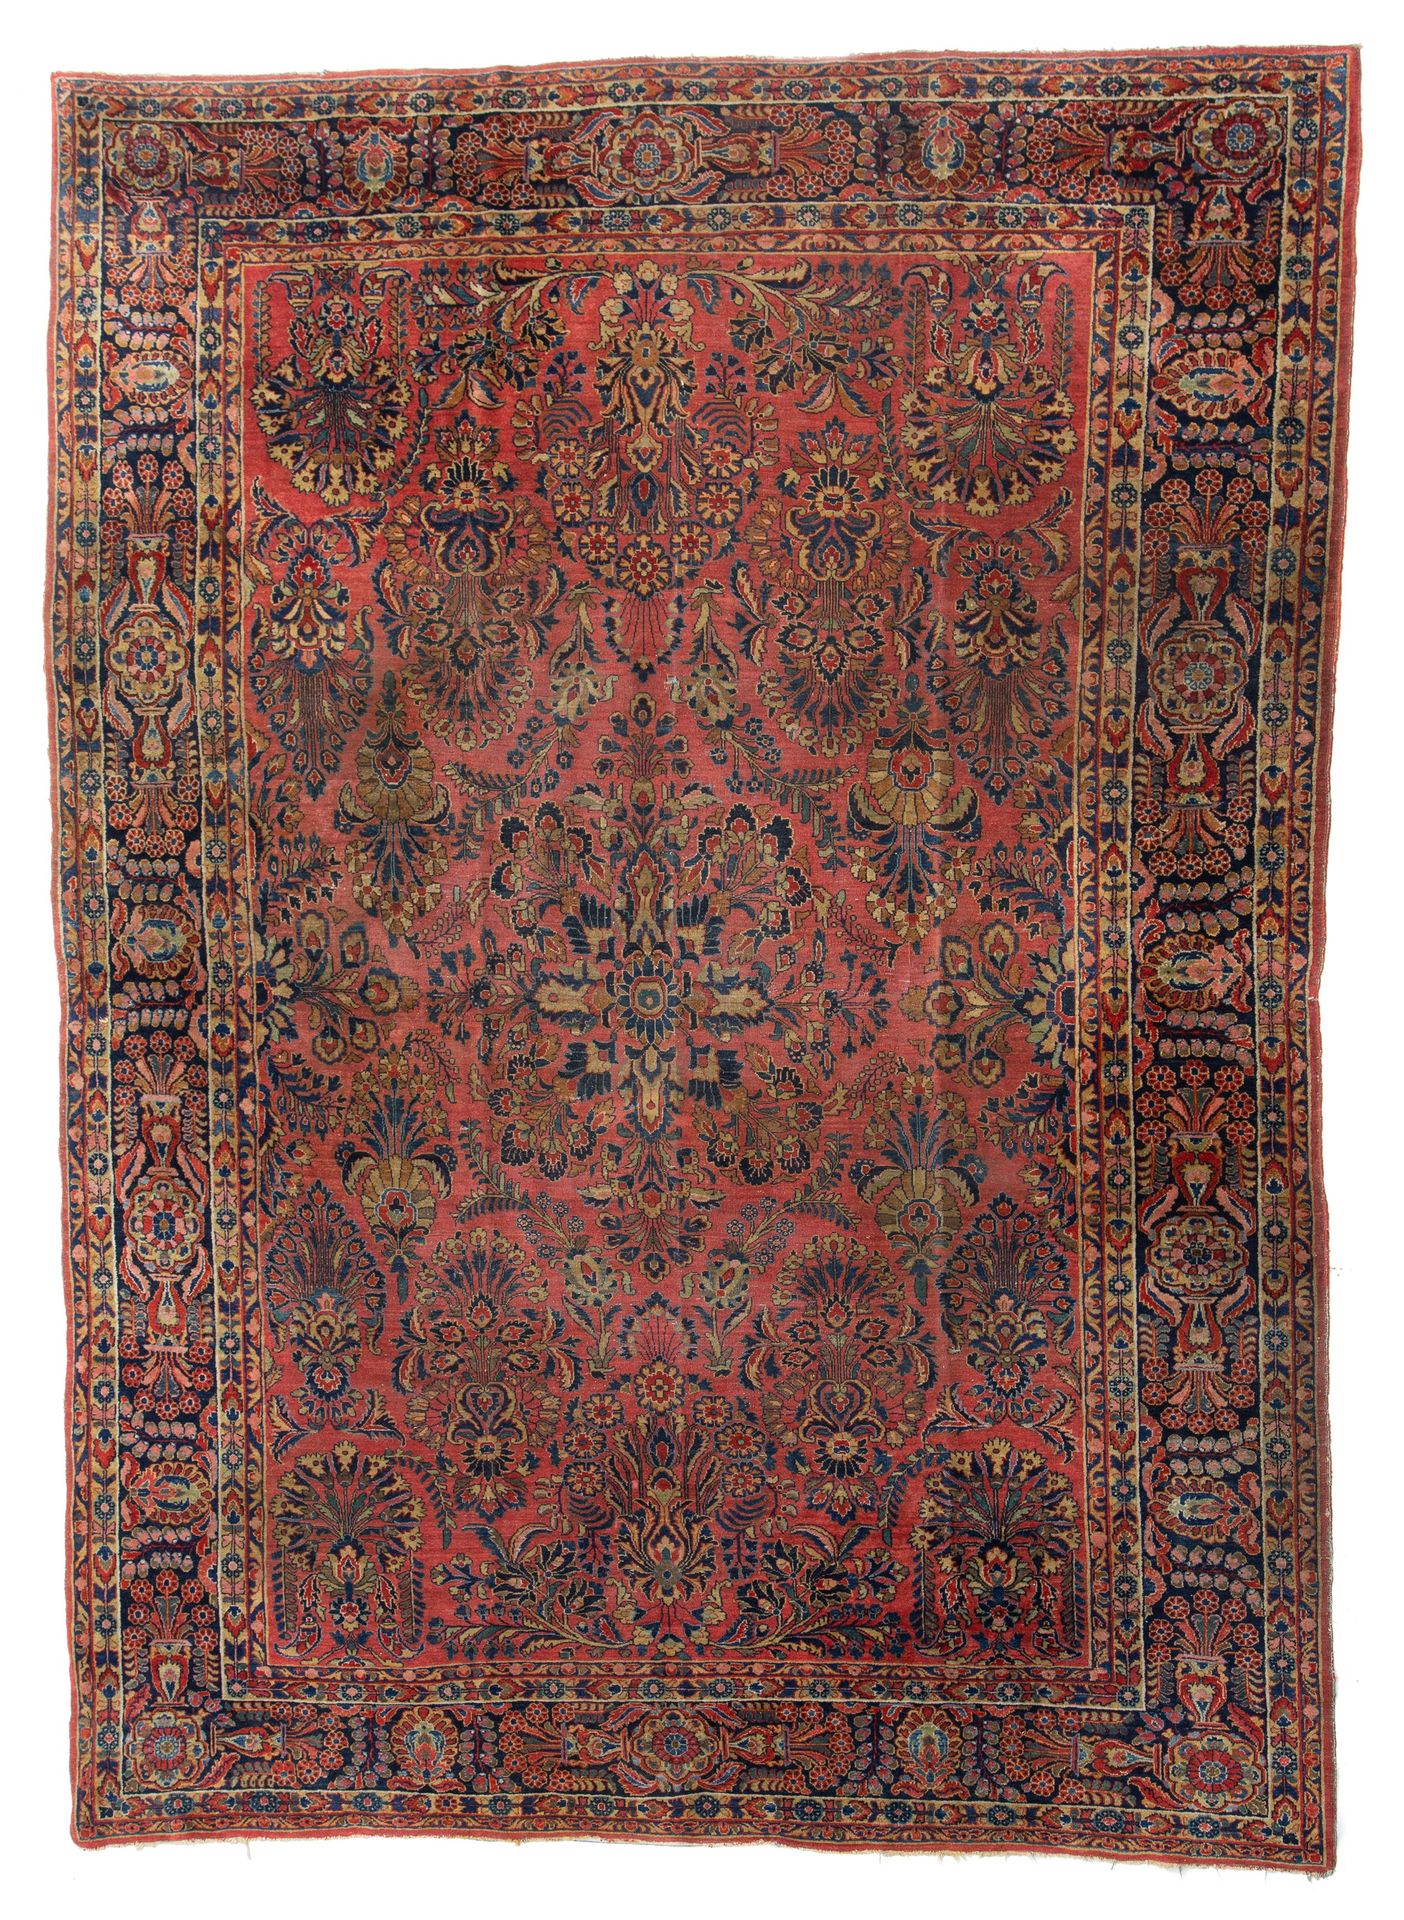 A large Sarouk rug, 1920's, 270 x 366 cm 一张大型萨鲁克地毯，1920年代，270 x 366厘米